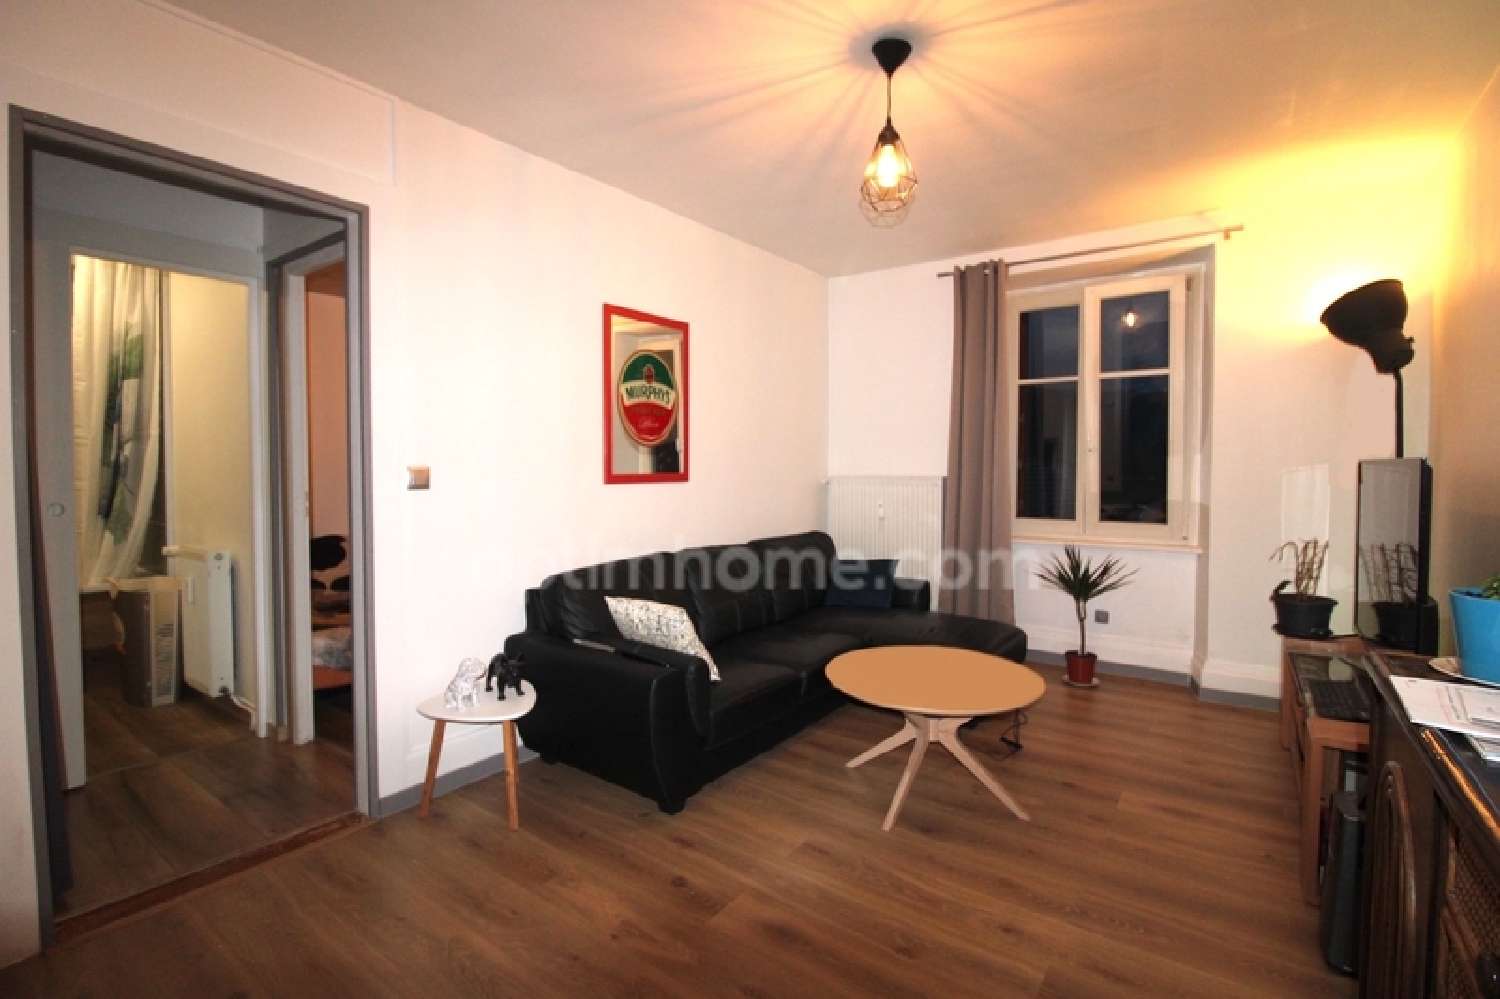  for sale apartment Montlebon Doubs 1